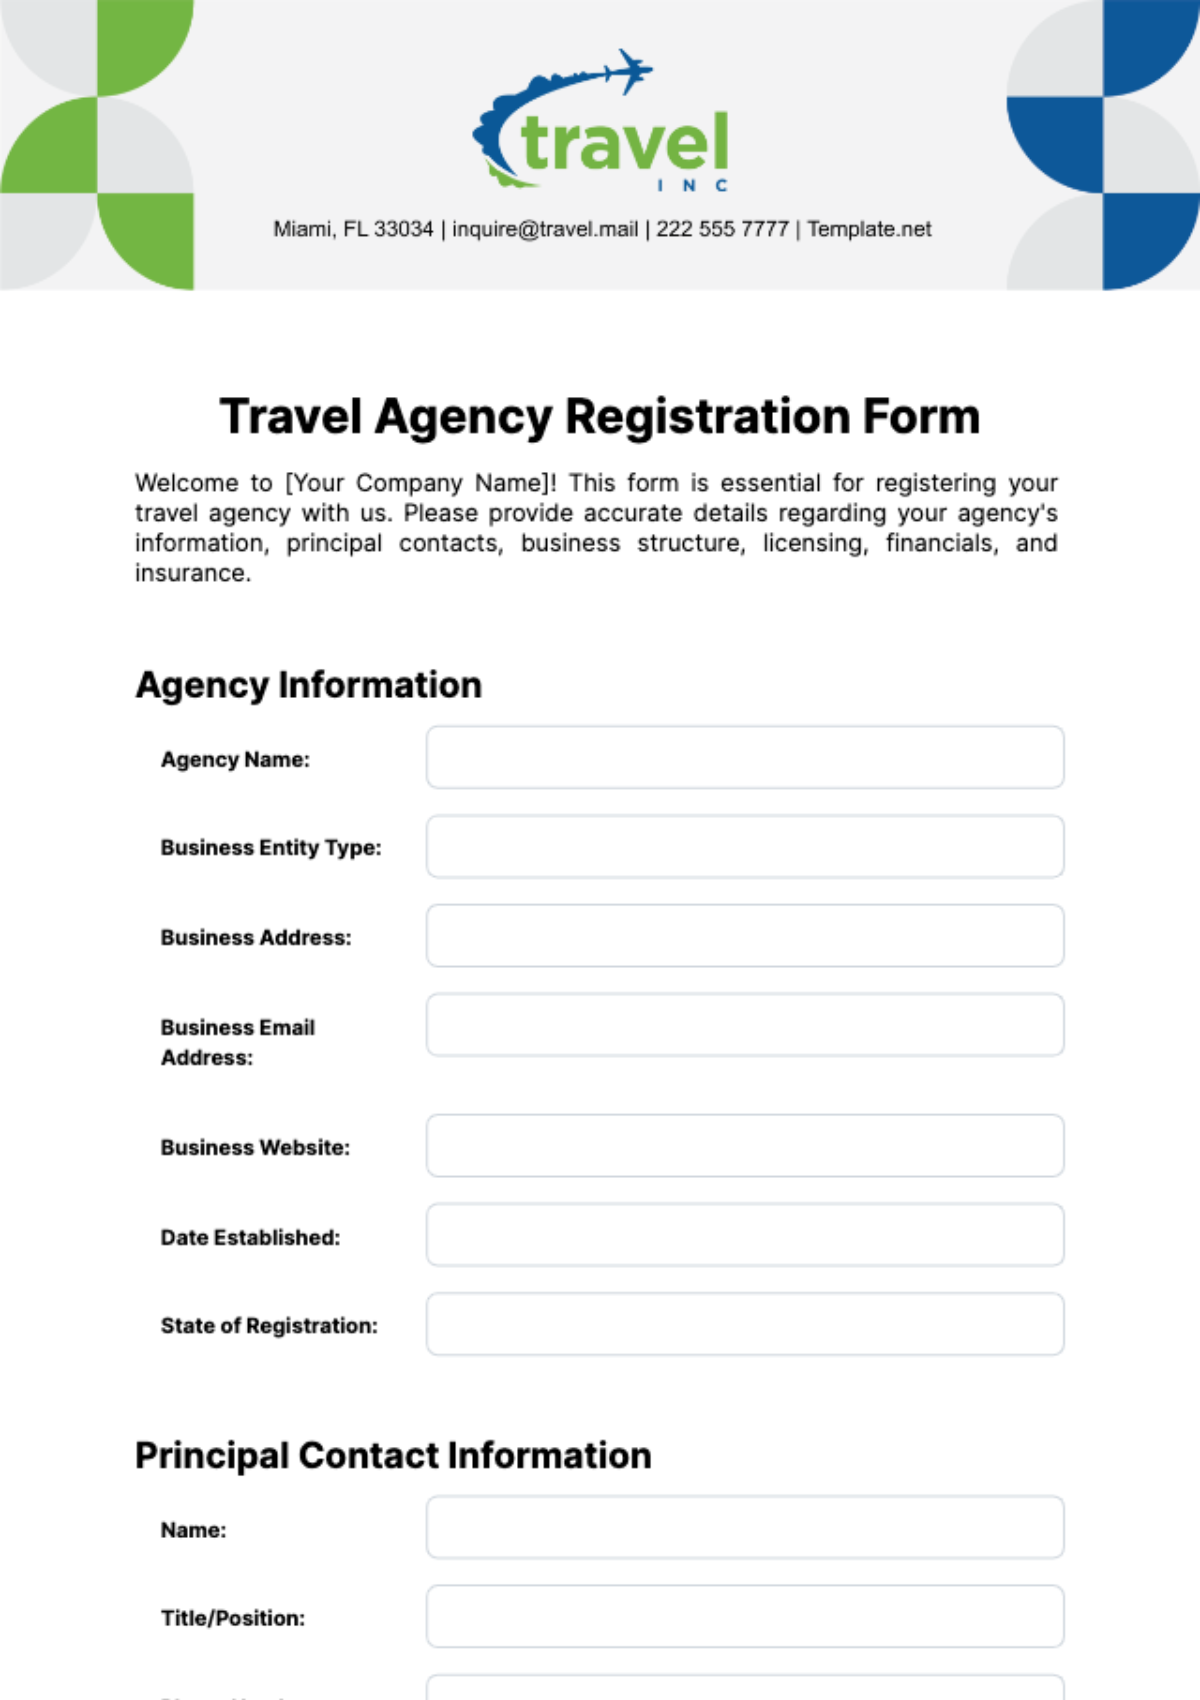 Travel Agency Registration Form Template